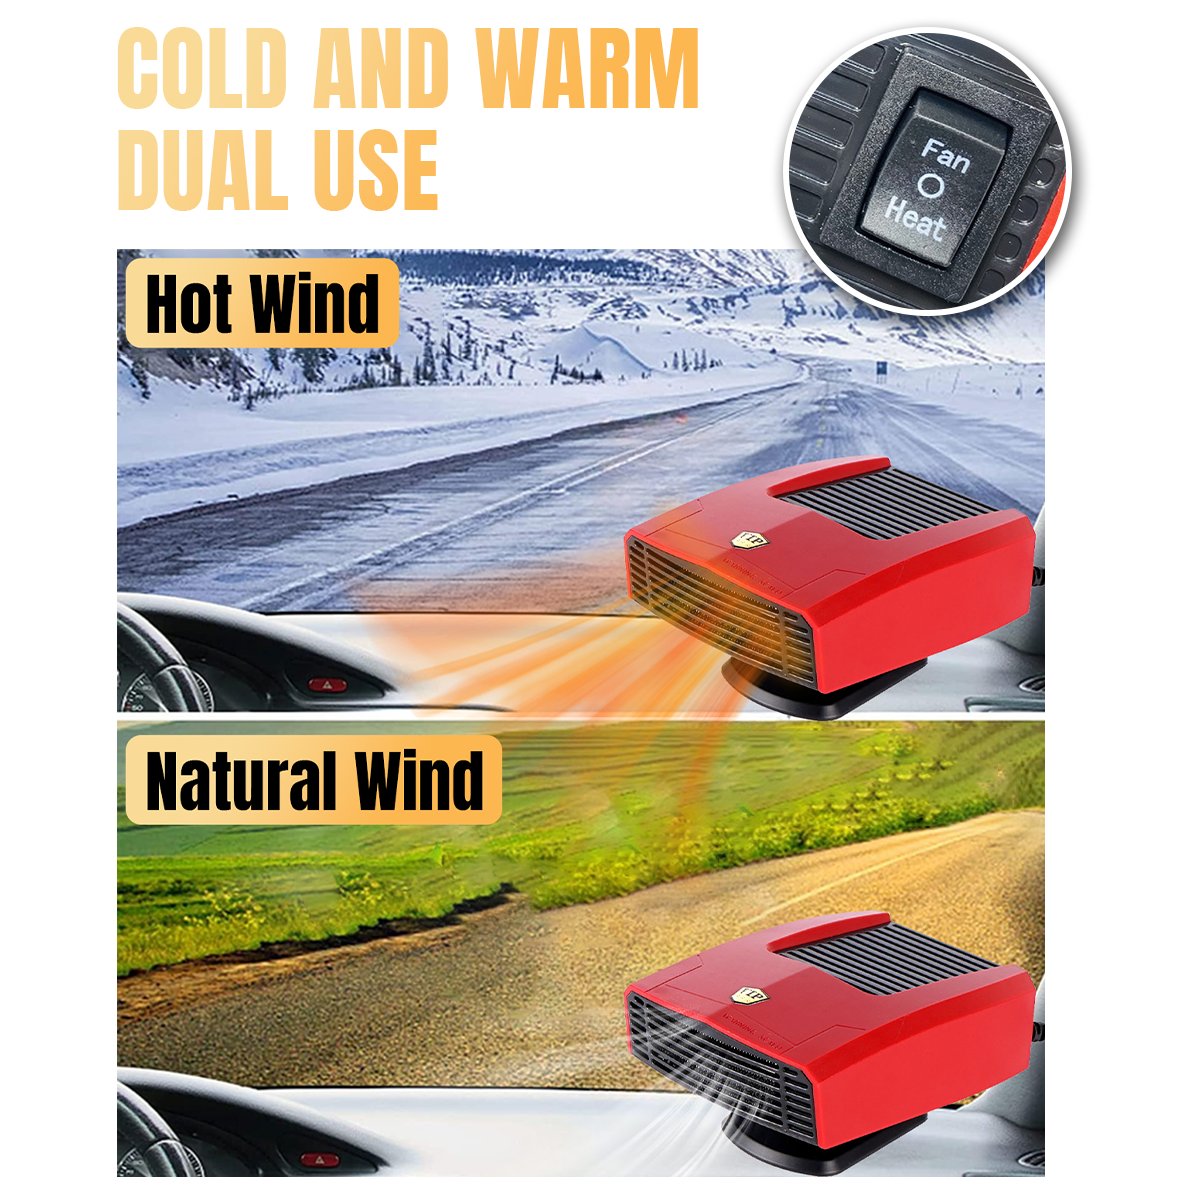 for Makita Battery Electric Car Heater Heating Fan Defogger Defroster  Demister